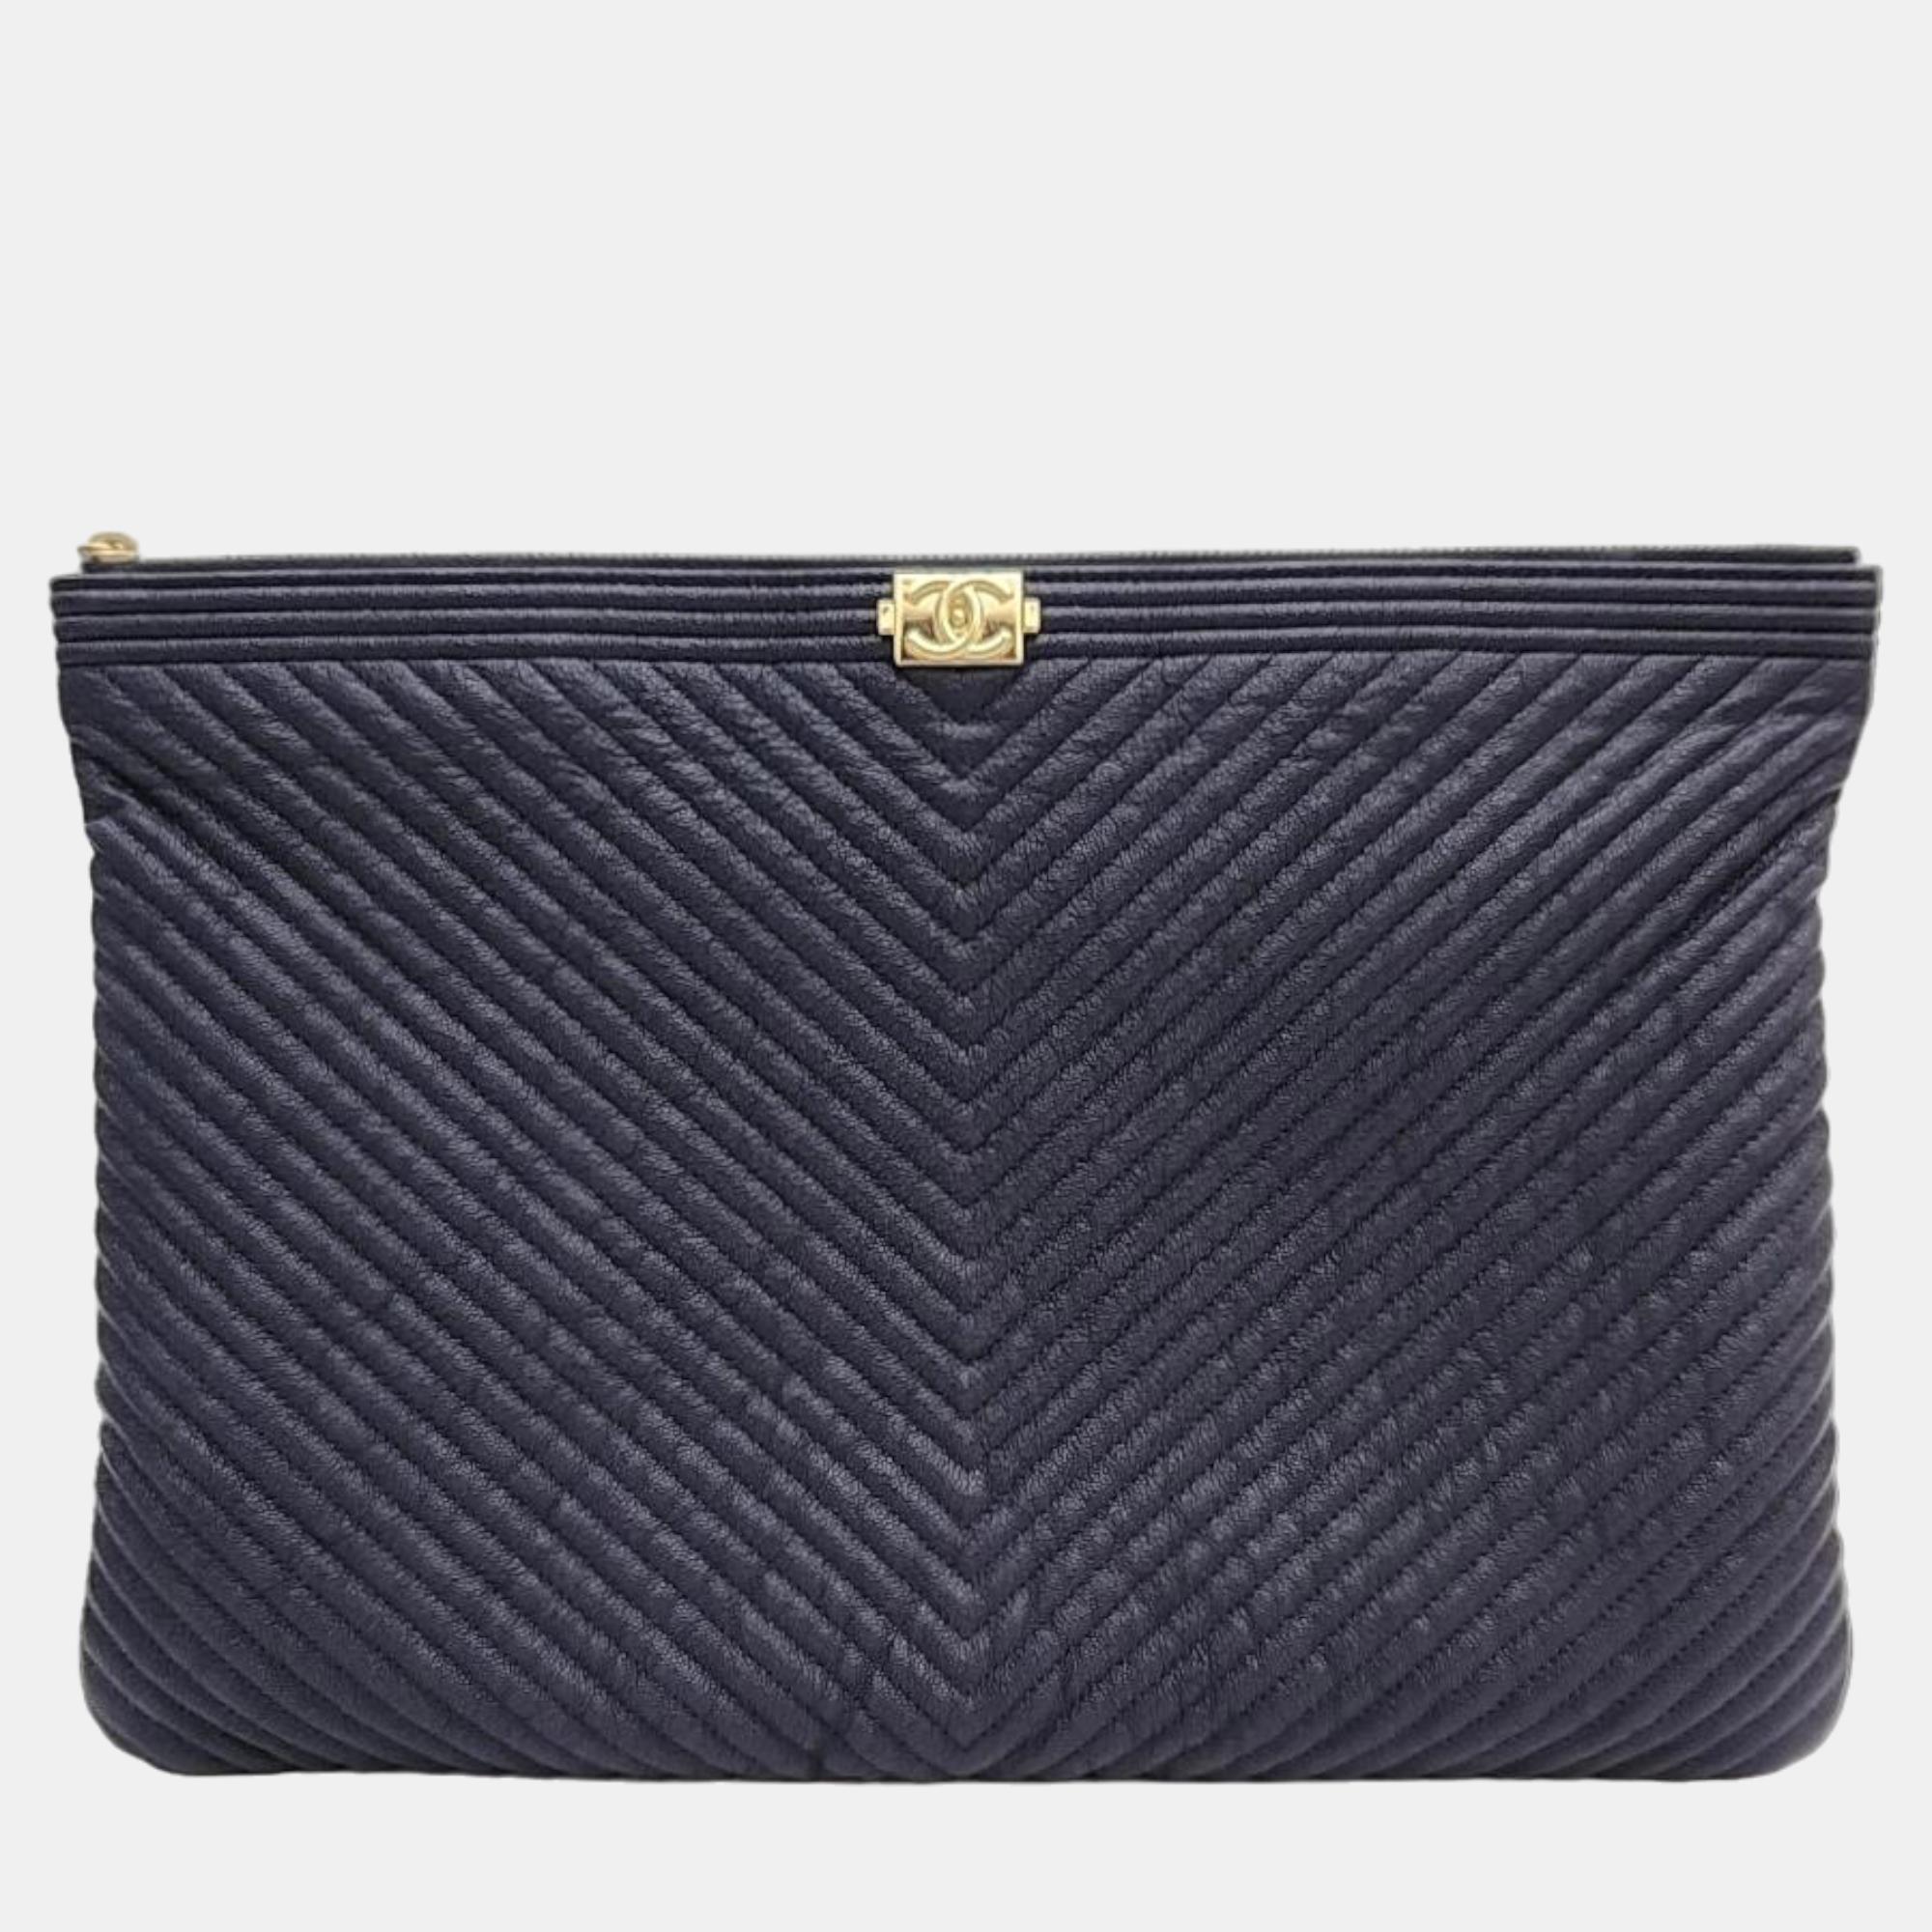 Chanel Navy Blue Caviar Leather Large O Case Boy Clutch Bag